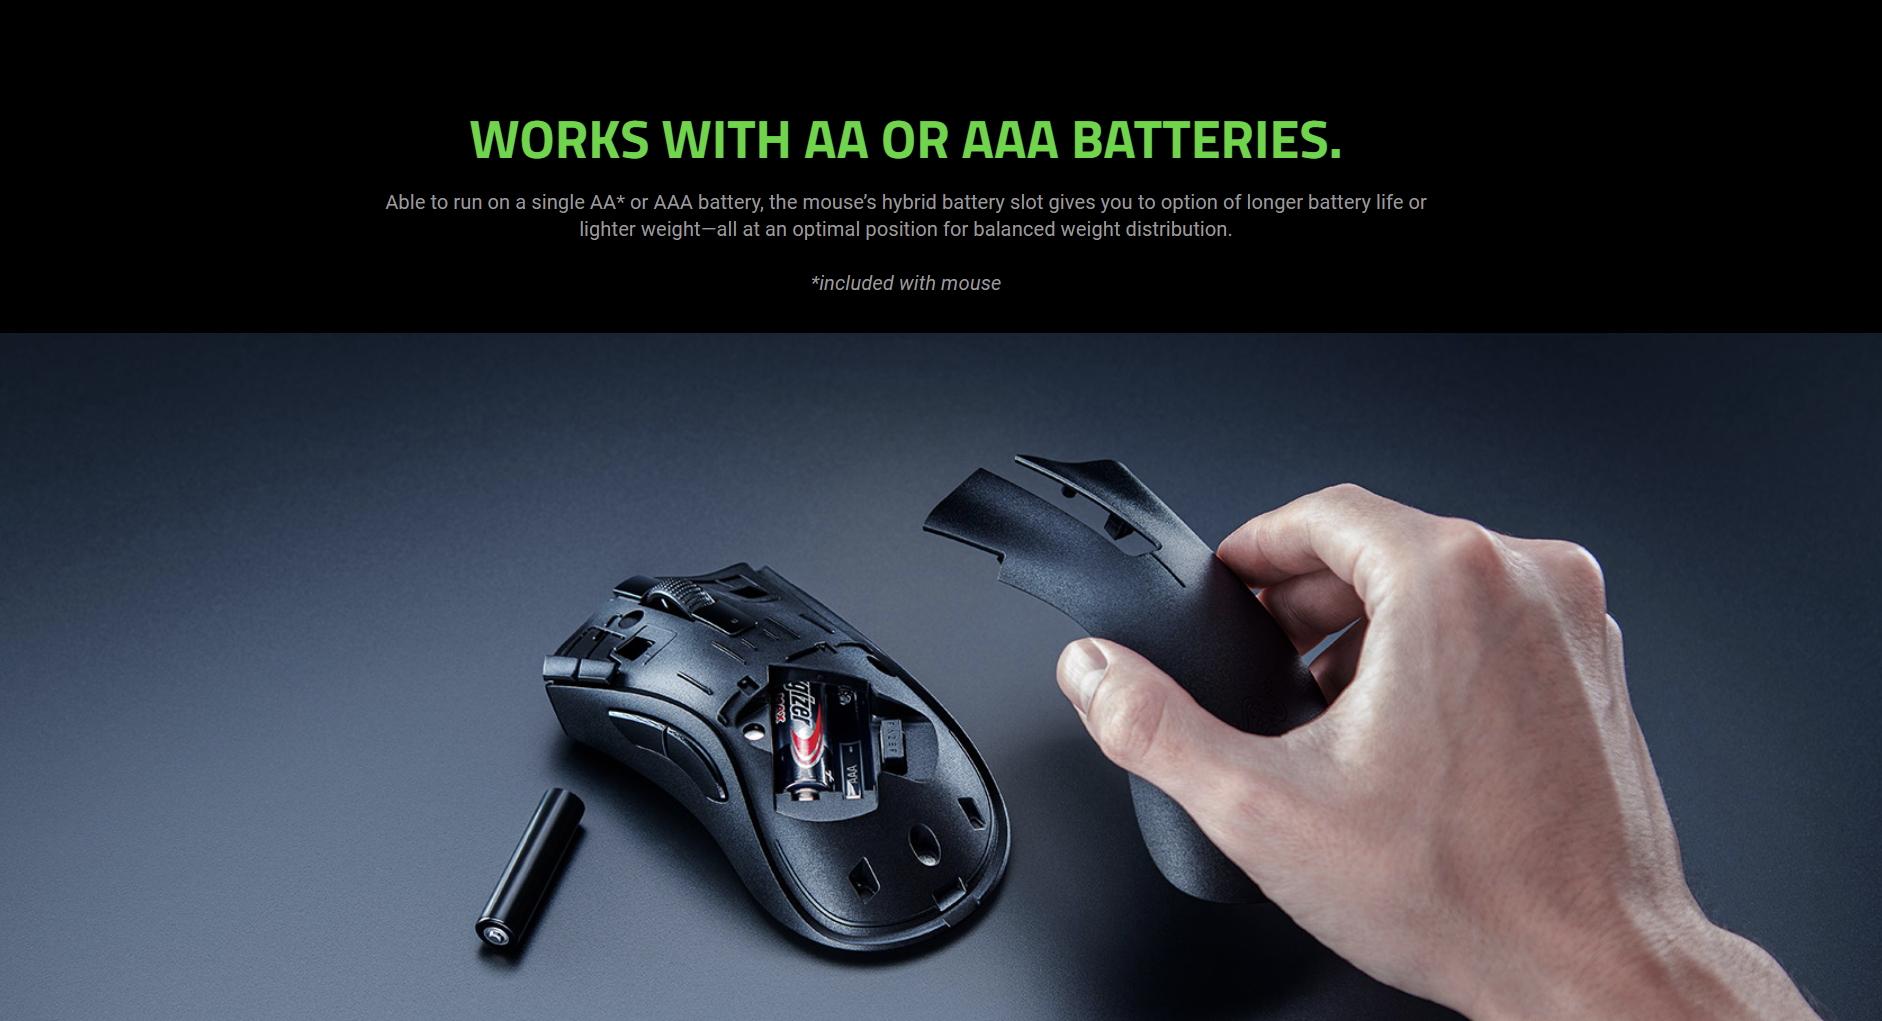 Free Gift] Razer DeathAdder V2 Pro Ergonomic Wireless Gaming Mouse –  RZ01-03350100-R3A1(2Y) – GamePro Shop